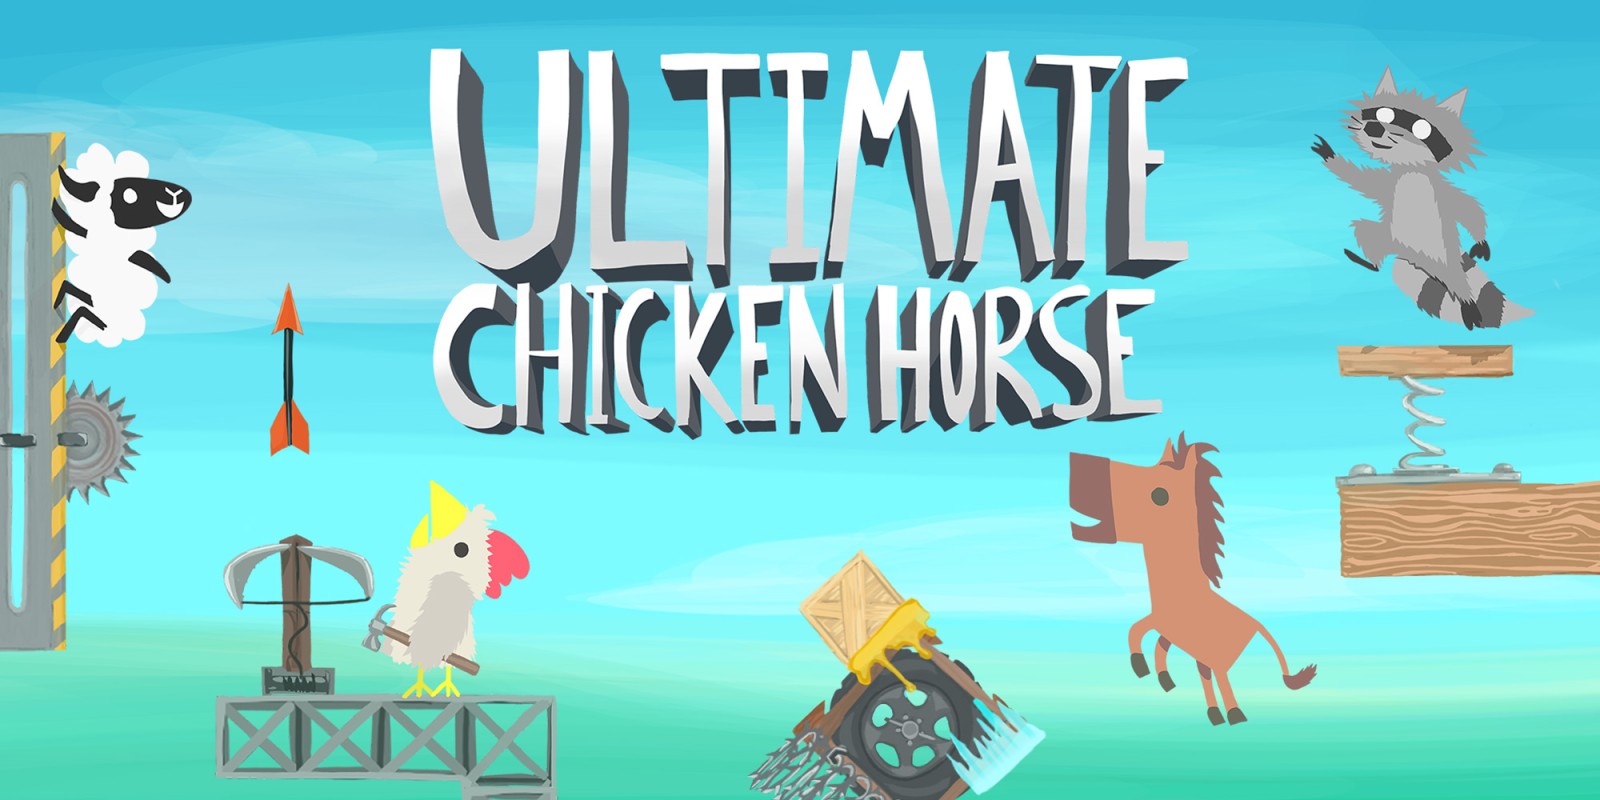 Tournoi de jeu vidéo : Utlimate Chicken Horse